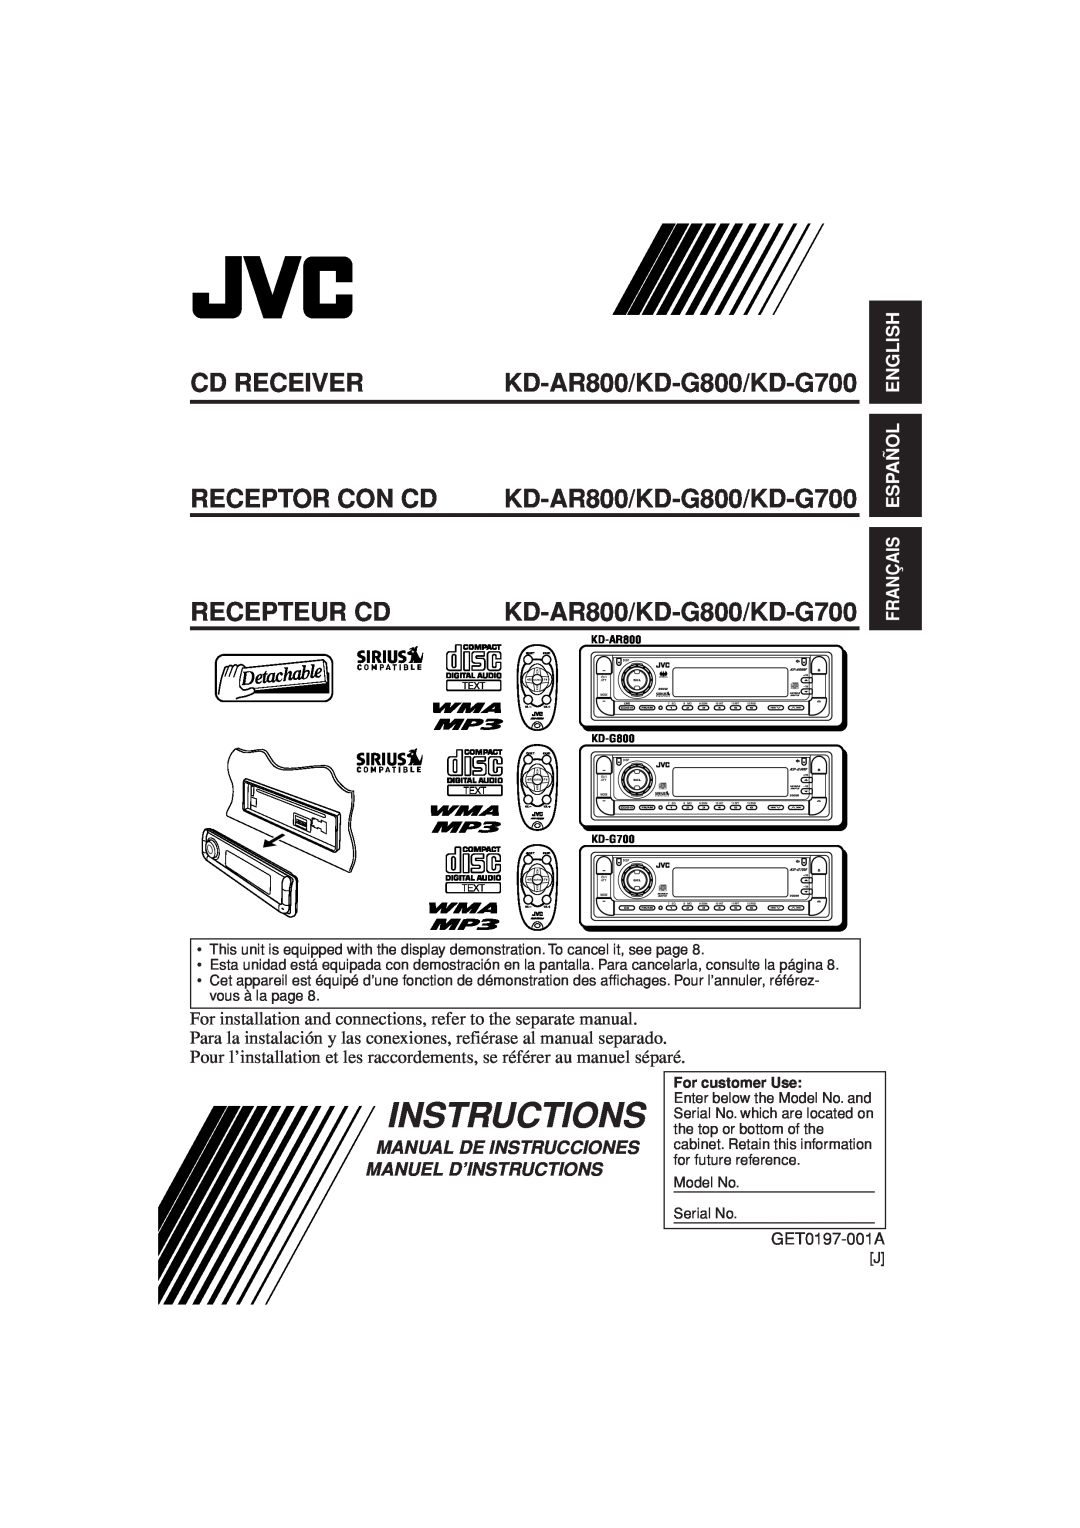 JVC manual Cd Receiver, Receptor Con Cd, Recepteur Cd, KD-AR800/KD-G800/KD-G700, English Español, Français 